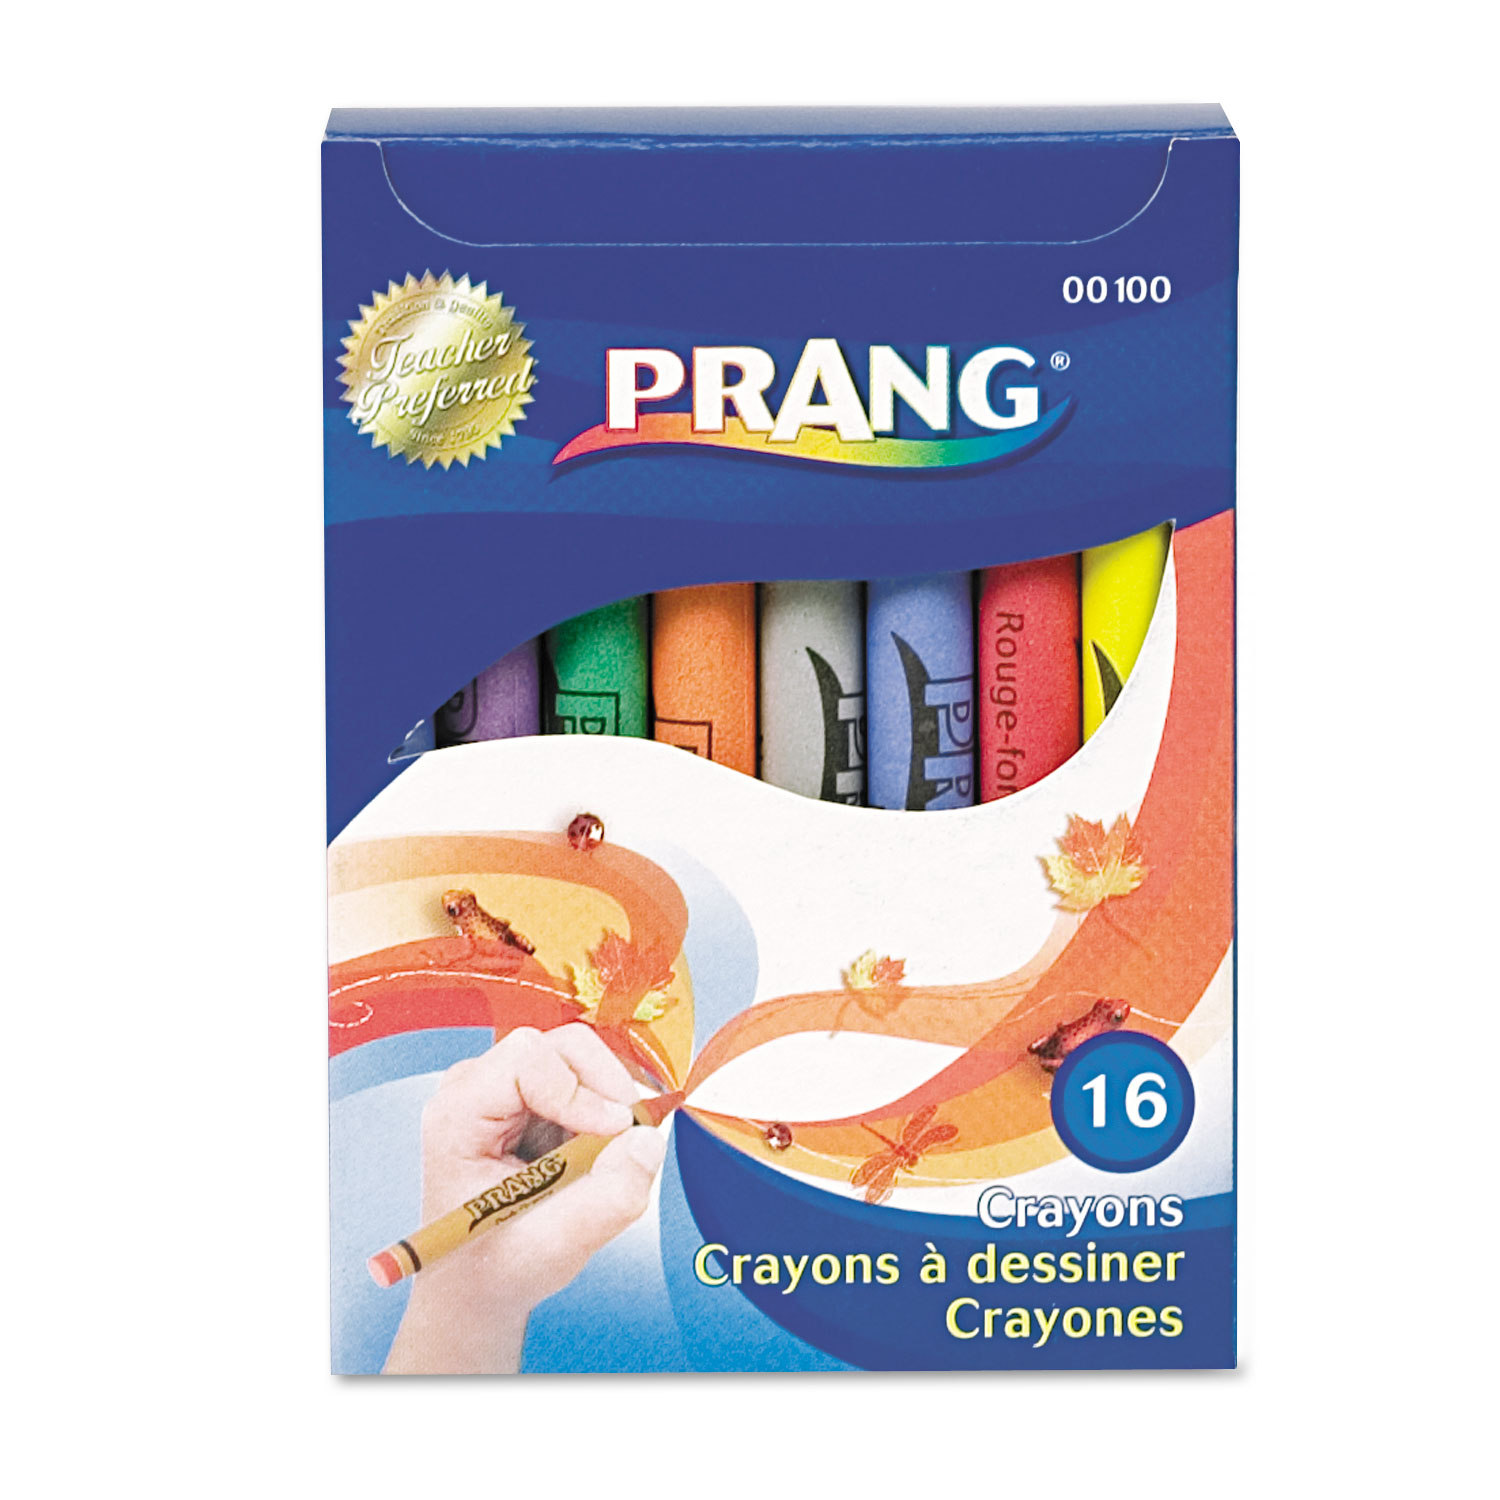  Prang 00100 Crayons Made with Soy, 16 Colors/Box (DIX00100) 